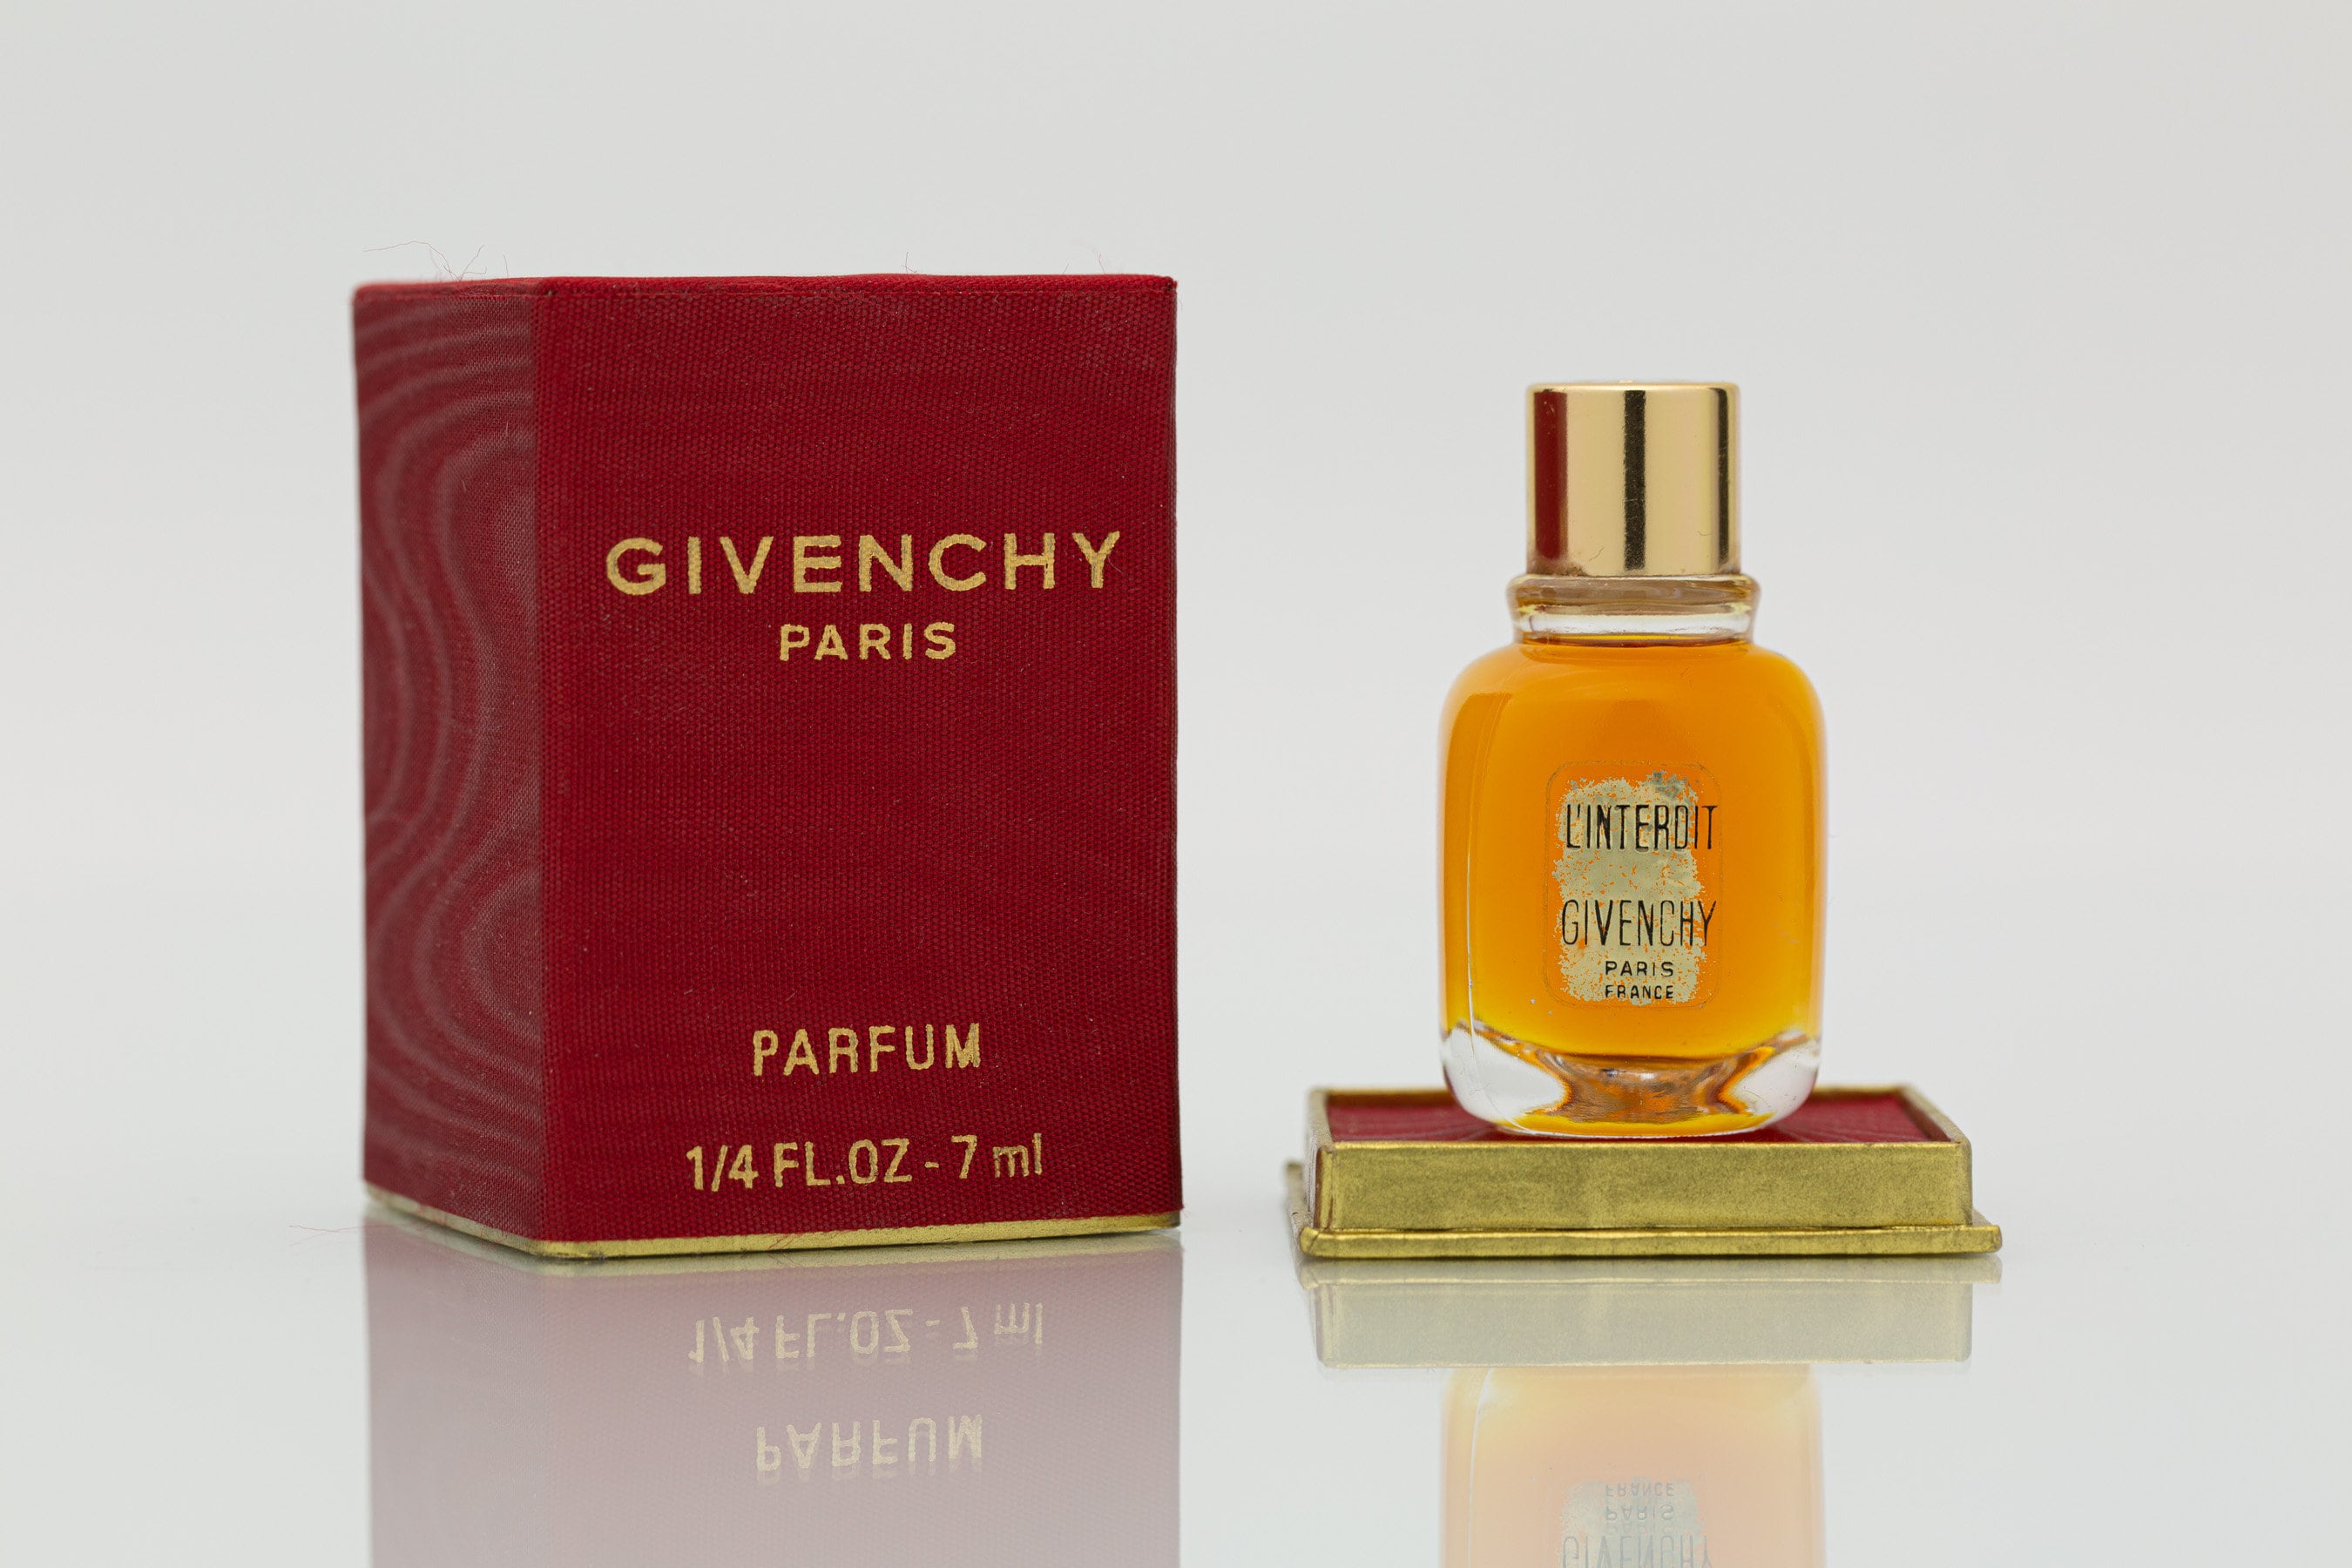 L'INTERDIT GIVENCHY Perfume 7 ml VINTAGE | Etsy